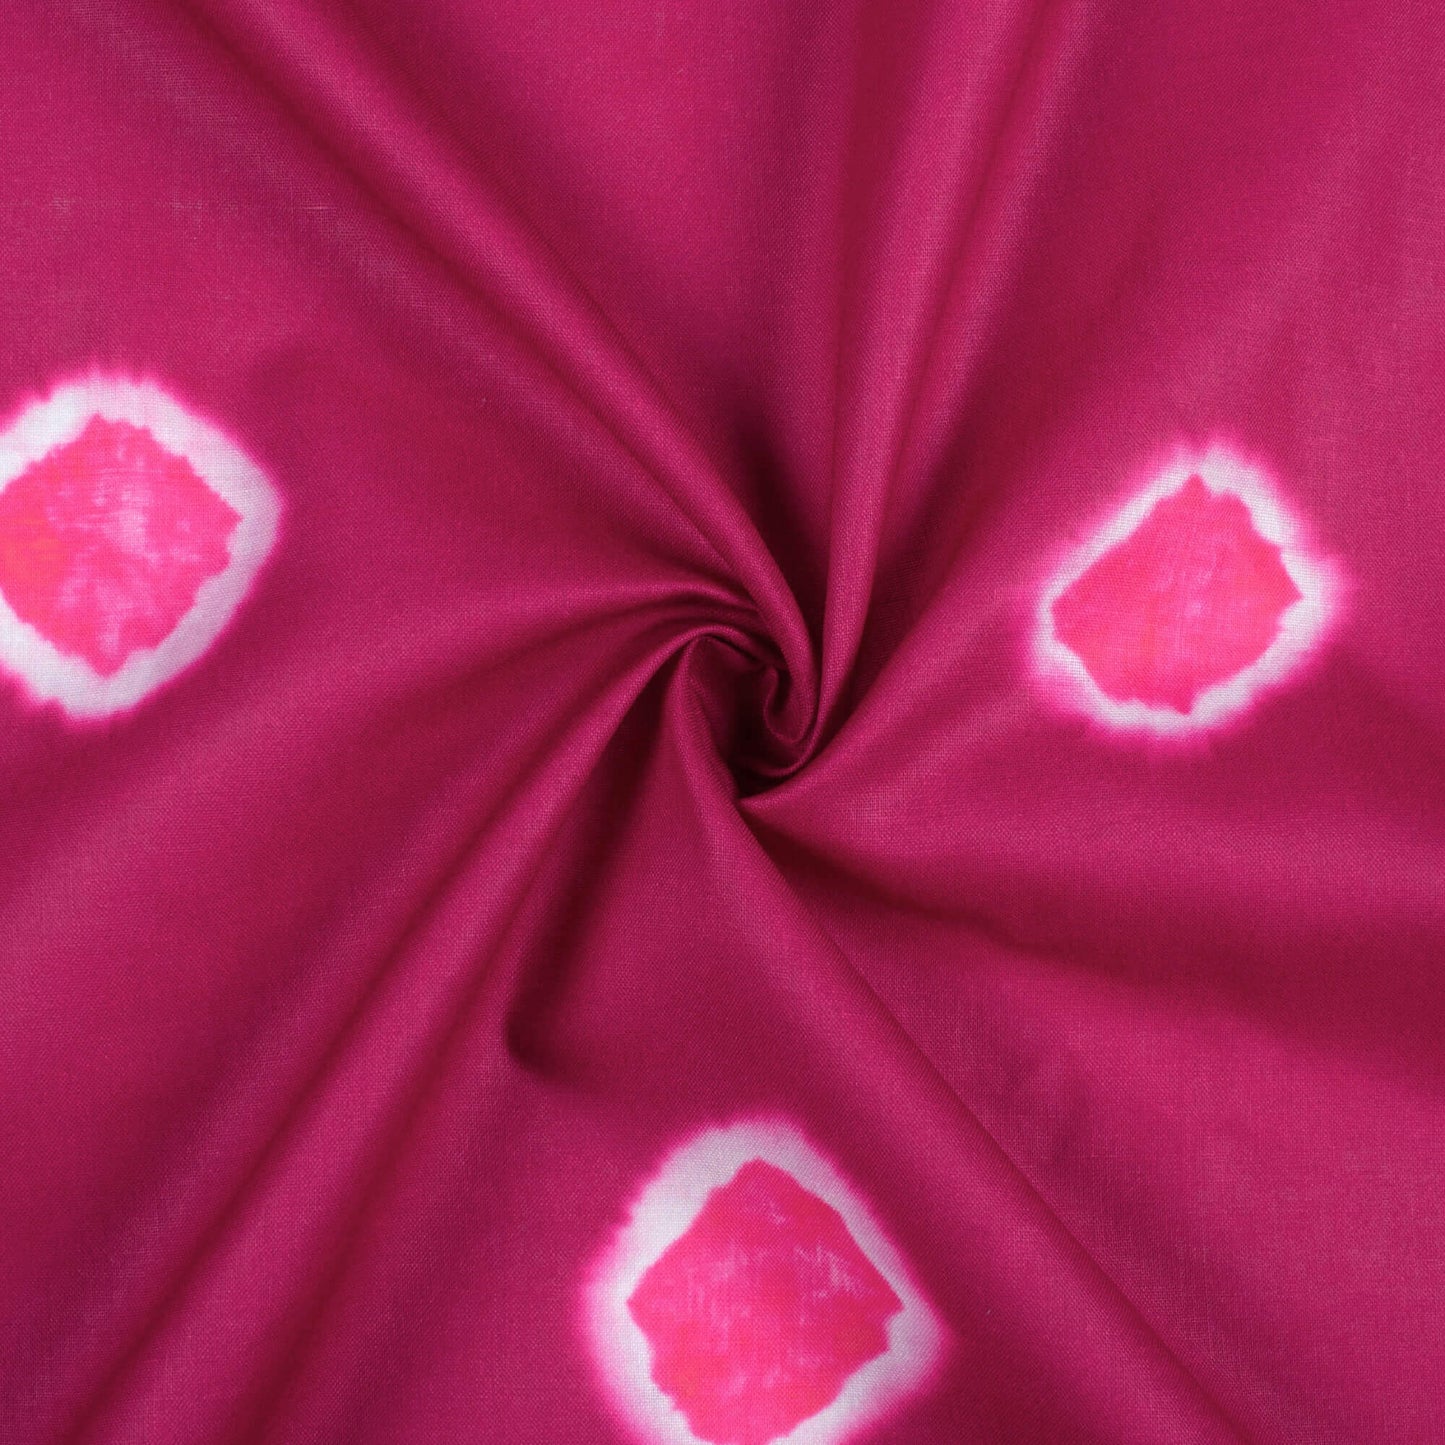 Magenta Purple And Pink Shibori Pattern Digital Print Poly Cambric Fabric